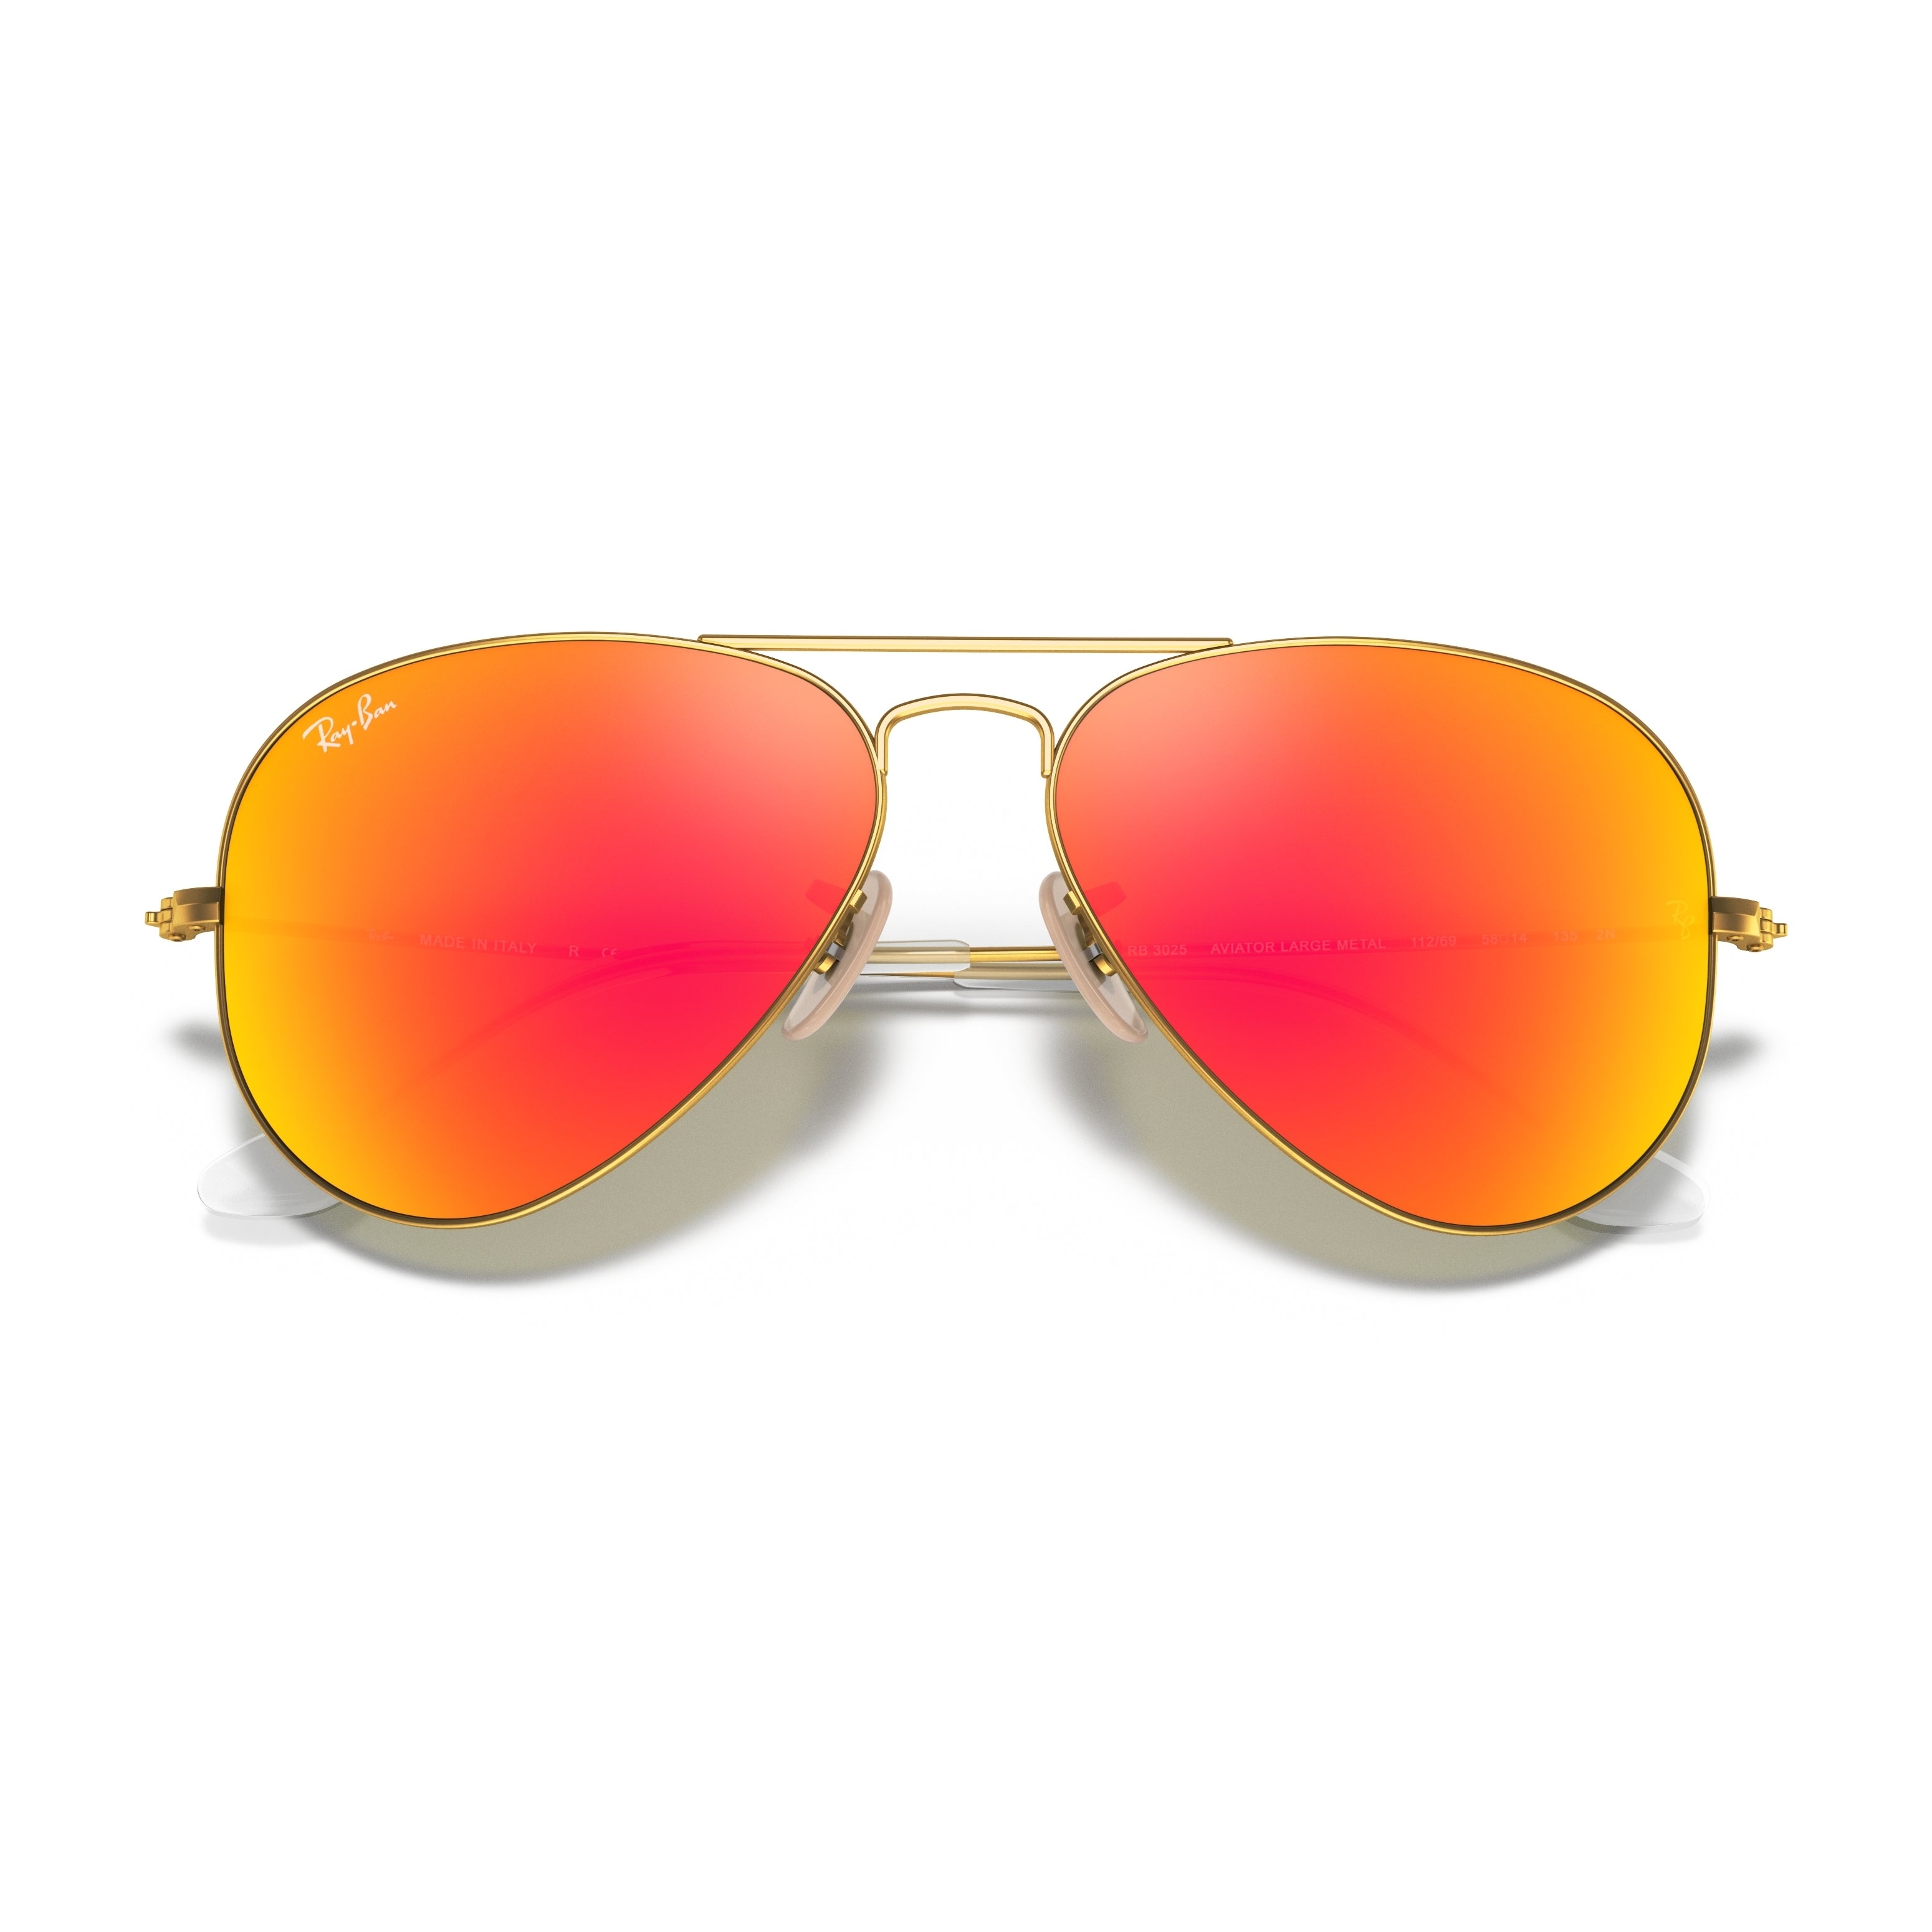 Ray-Ban Ray-Ban Aviator Flash Lenses Orange Flash Pilot Unisex Sunglasses RB3025 112/69 58